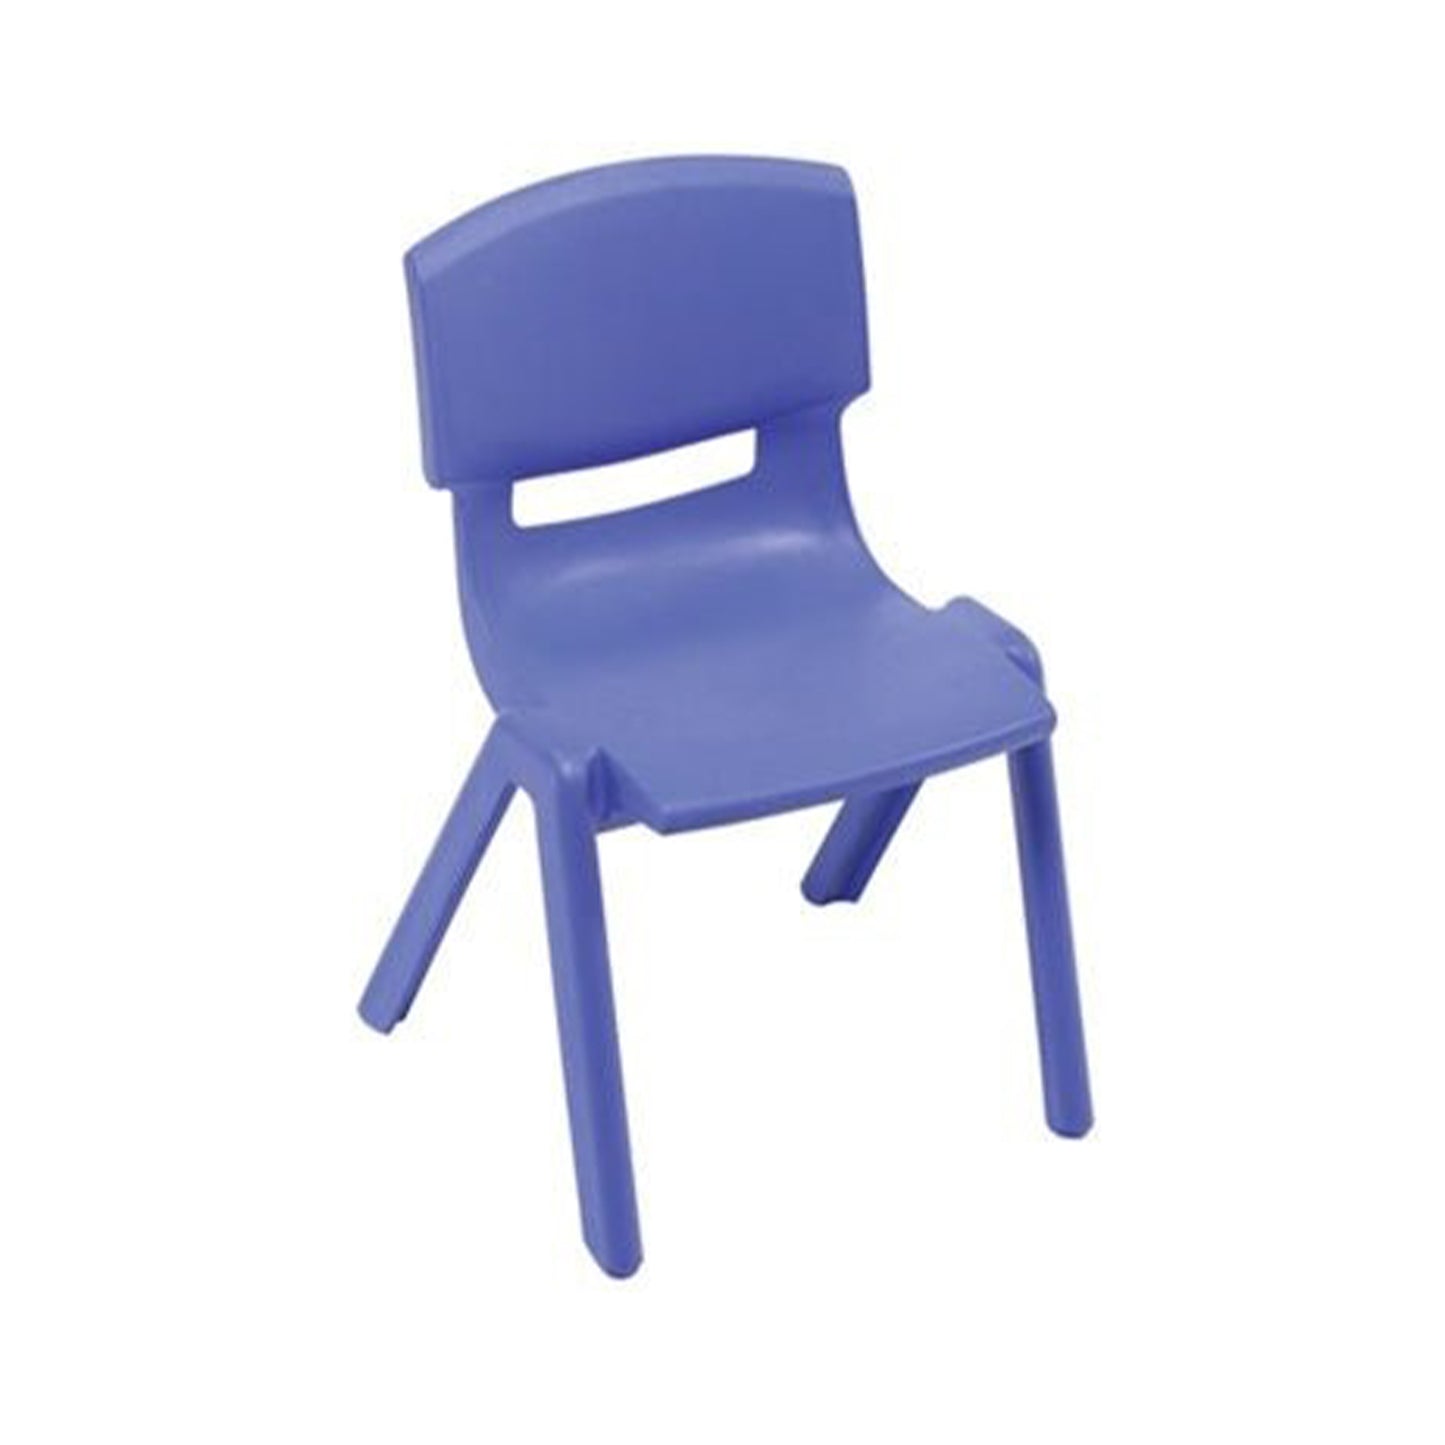 AmTab Classroom School Chair for 3rd Grade through 5th Grade - Stackable - 16.25"W x 17.75"L x 26.75"H - Seat Height 15.5"H  (AMT-CLASSCHAIR-4)